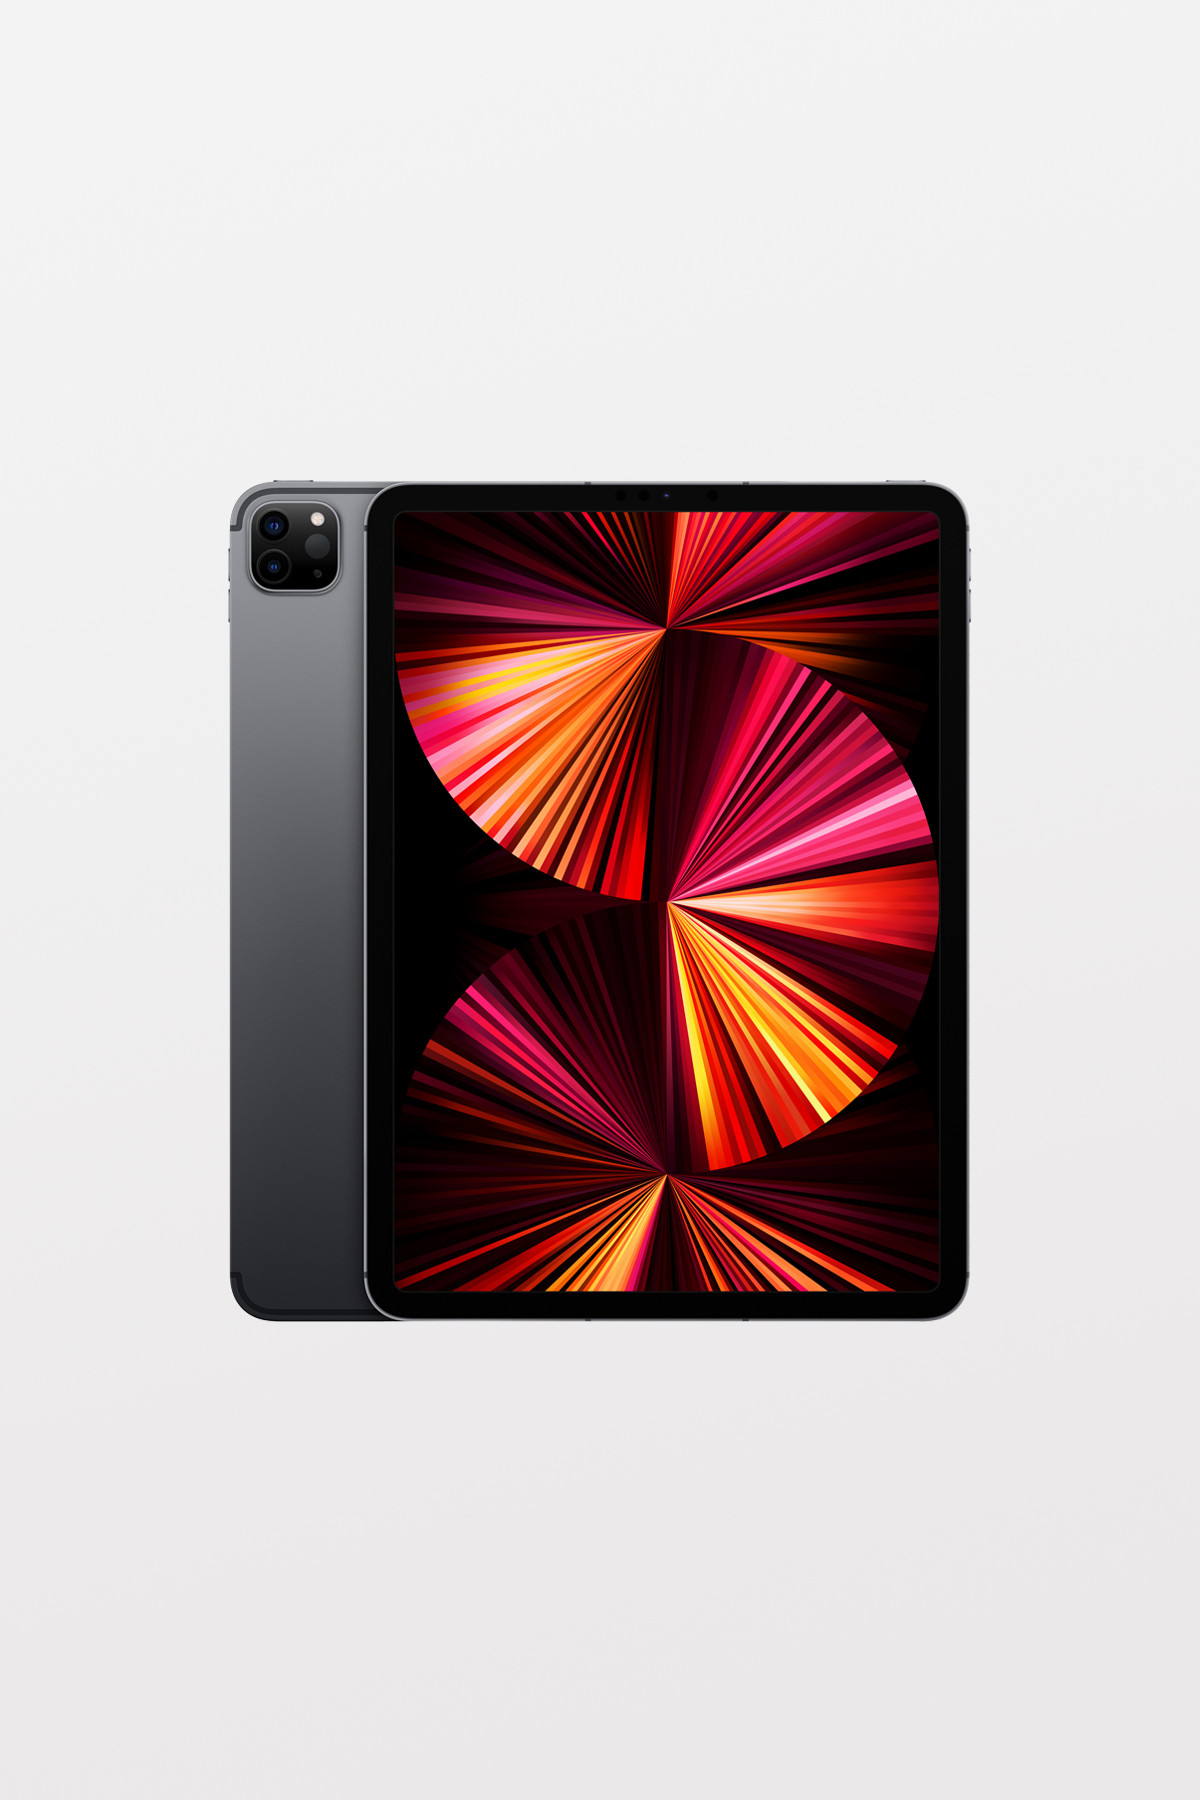 iPad Pro 11IN (3GEN) WI-FI + Cellular 256GB Space Grey